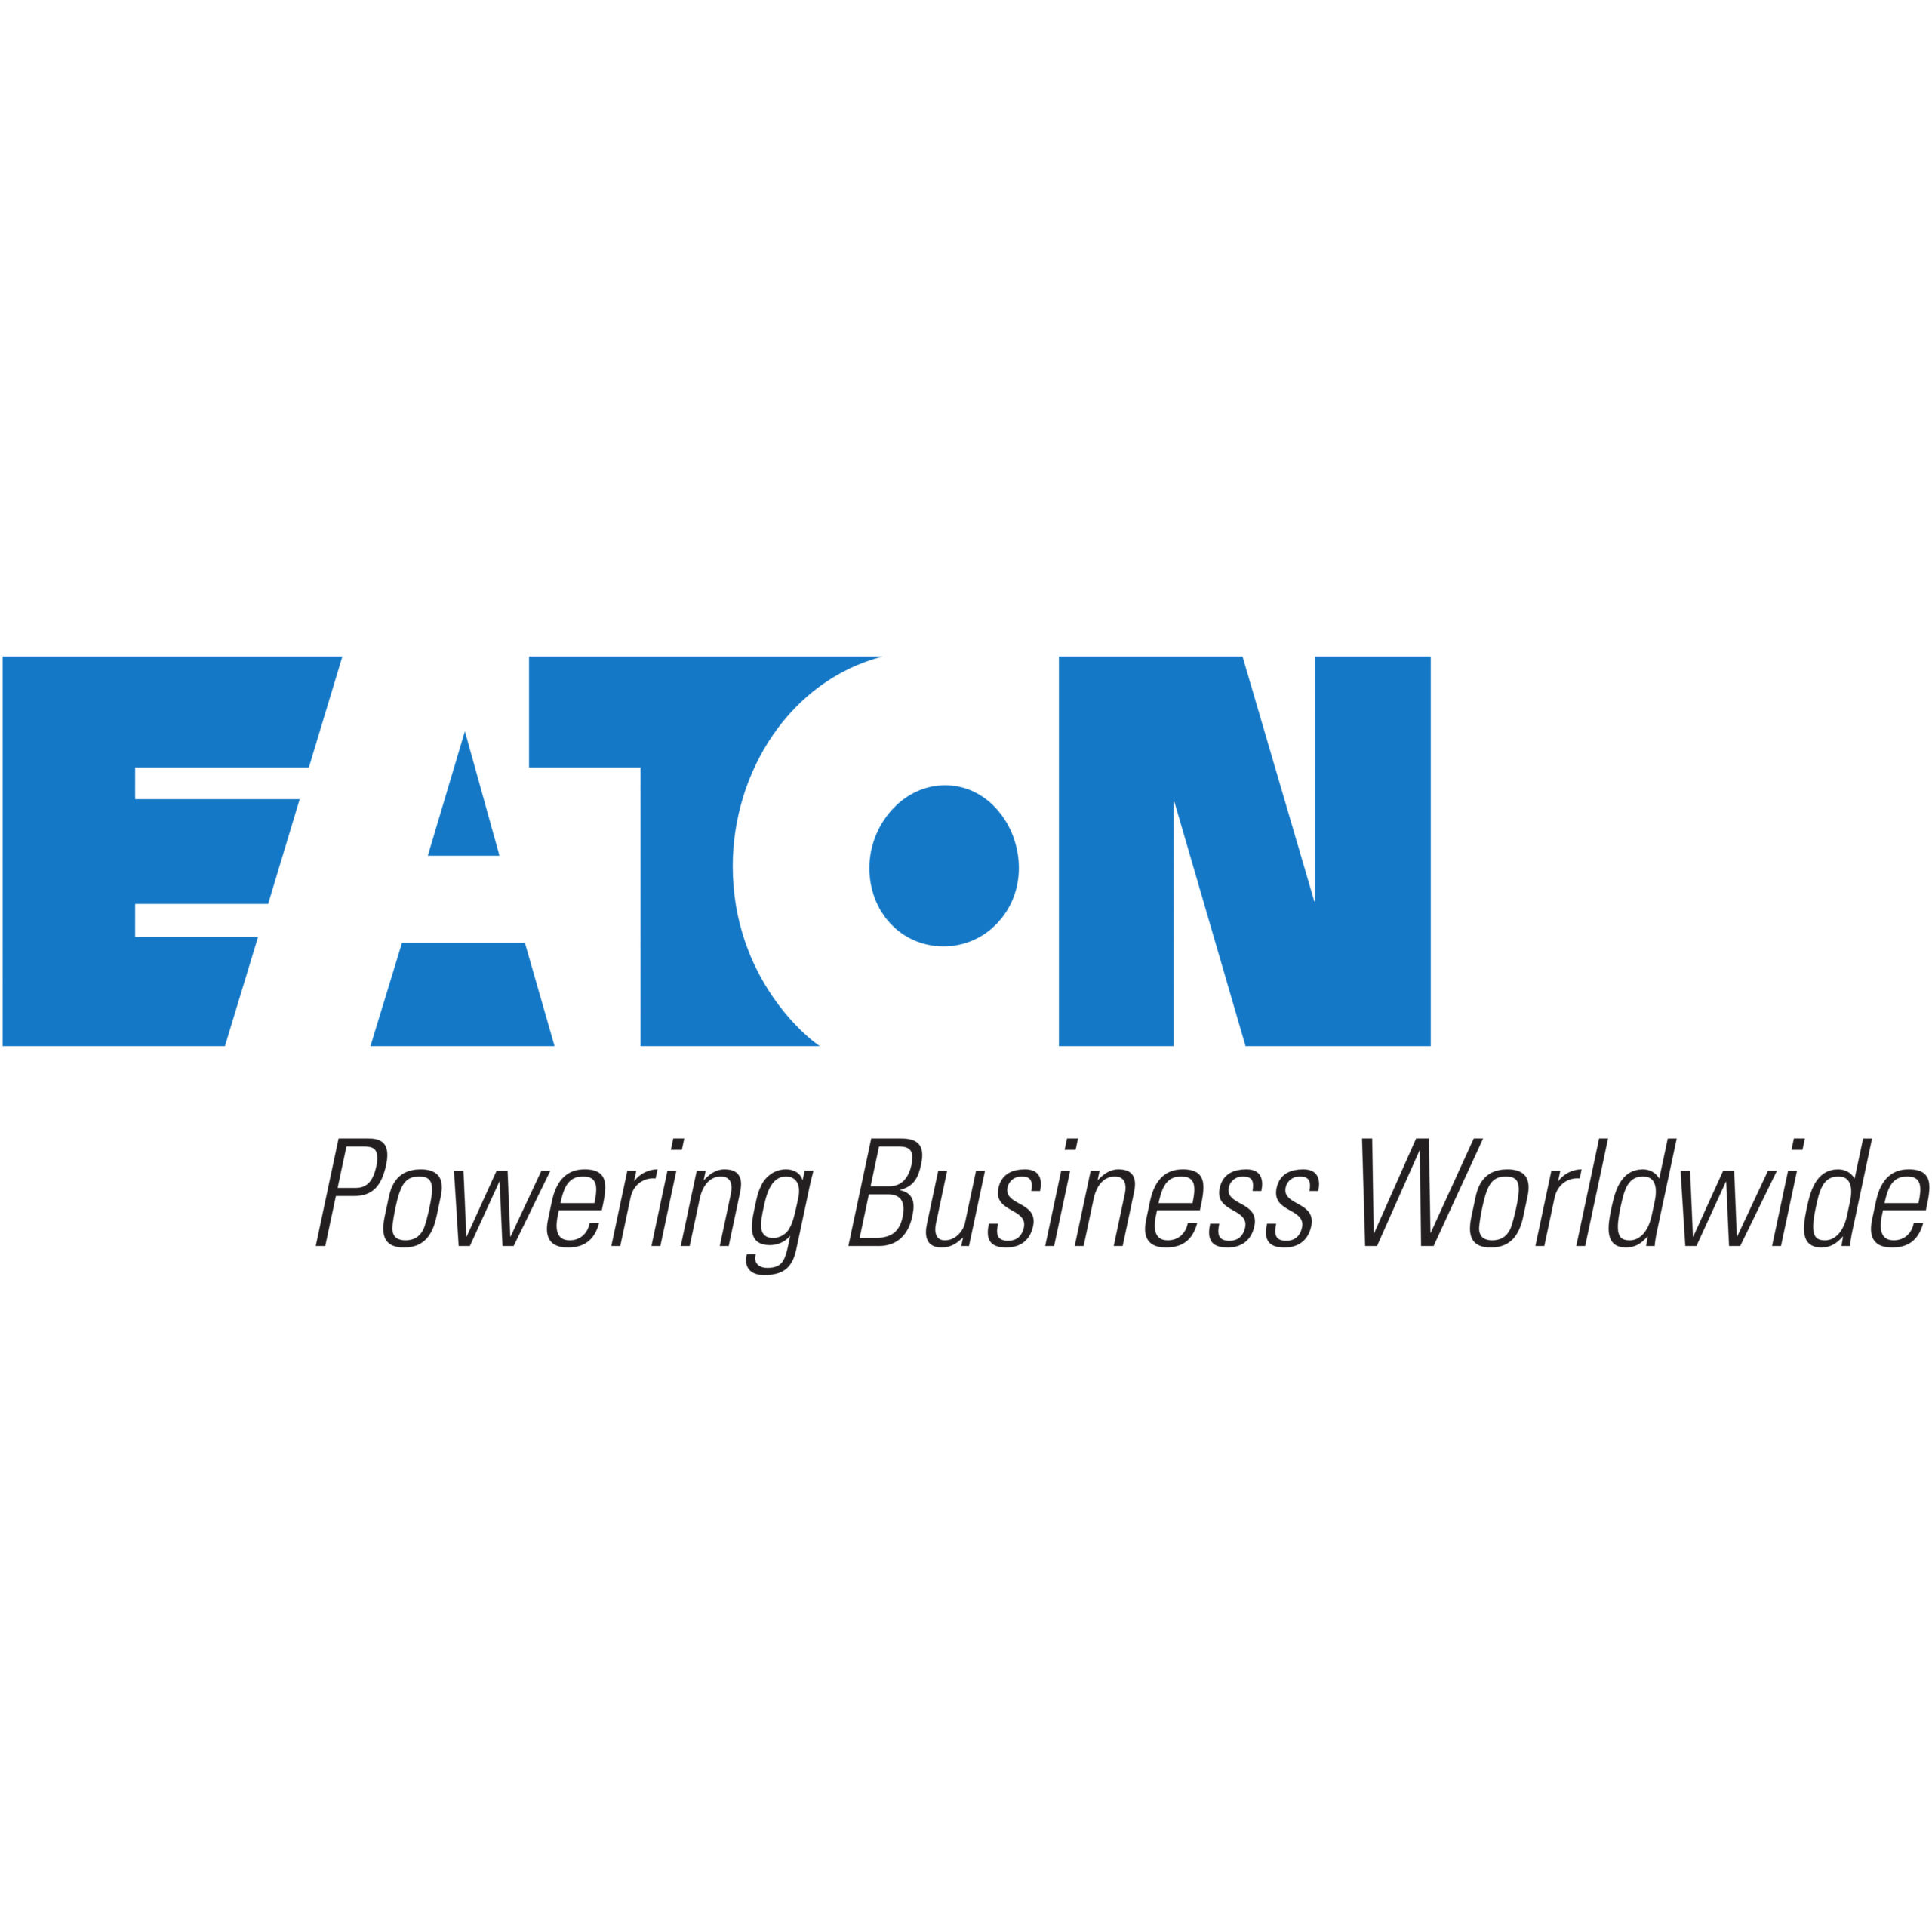 Eaton BladeUPS Power System6U4.80 Minute Stand-by220 V AC Input400 V AC, 240 V AC Output ZC1224408100000